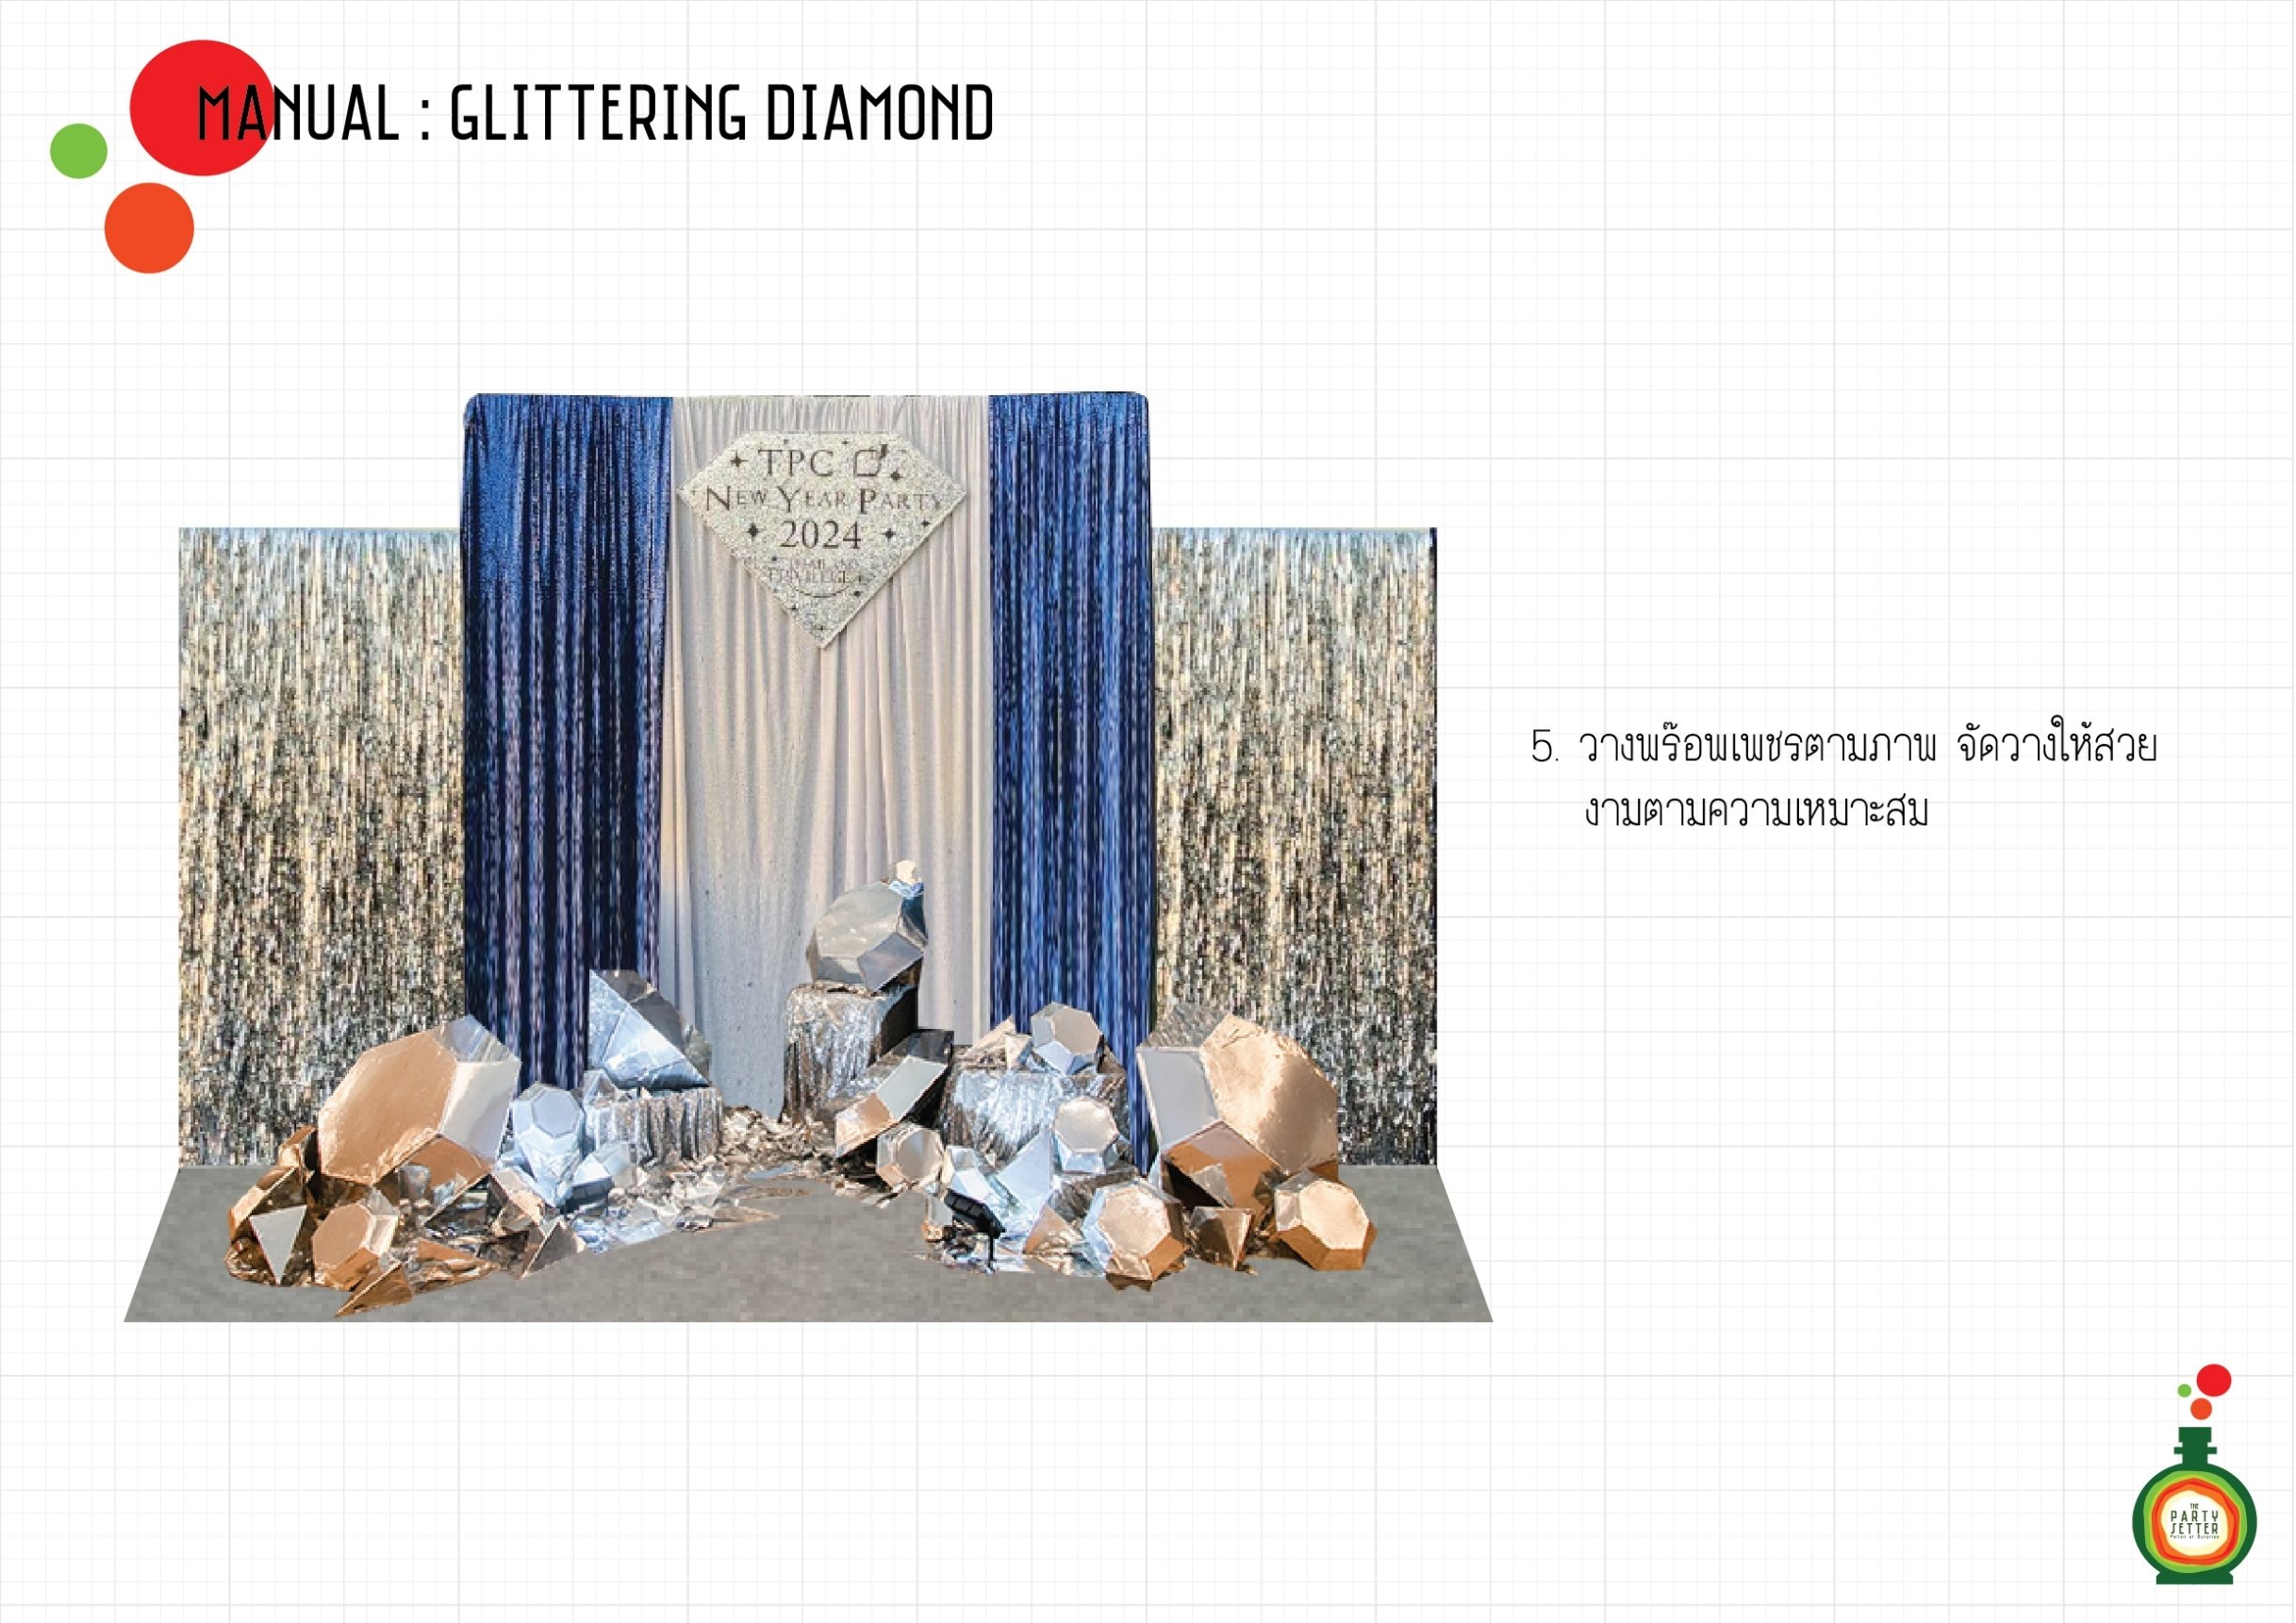 Manual_Glittering Diamond-05-01.jpg